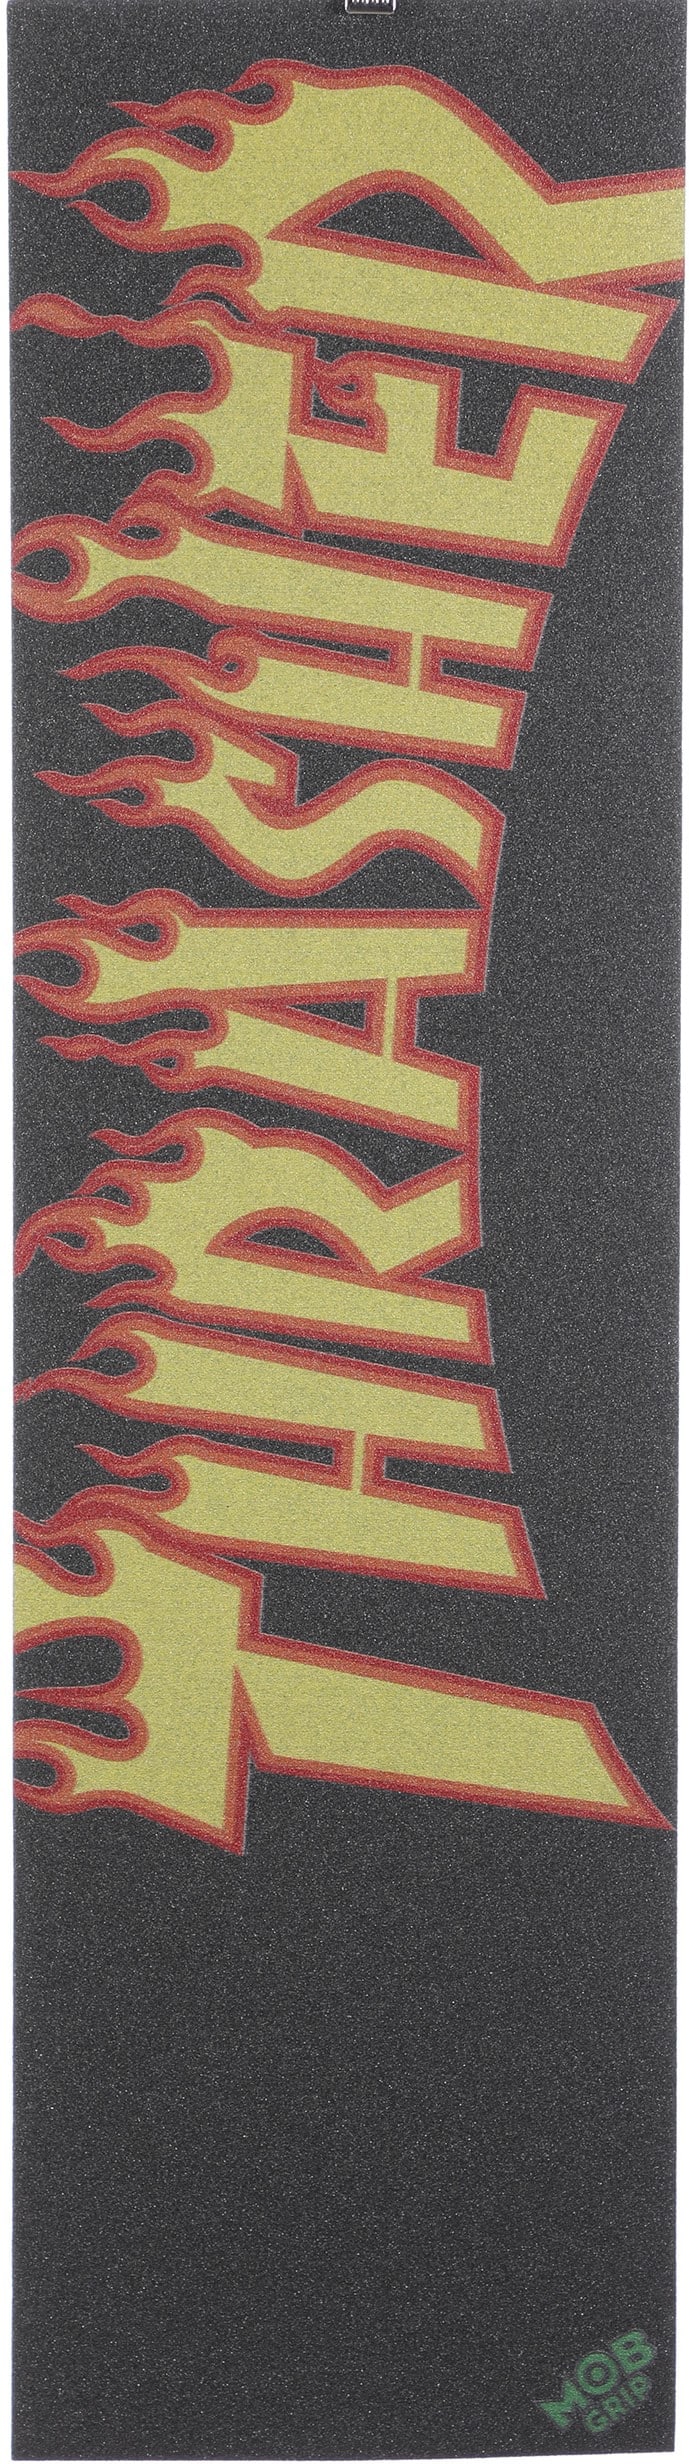 MOB GRIP Thrasher Graphic Skateboard Grip Tape - yellow/orange flame ...